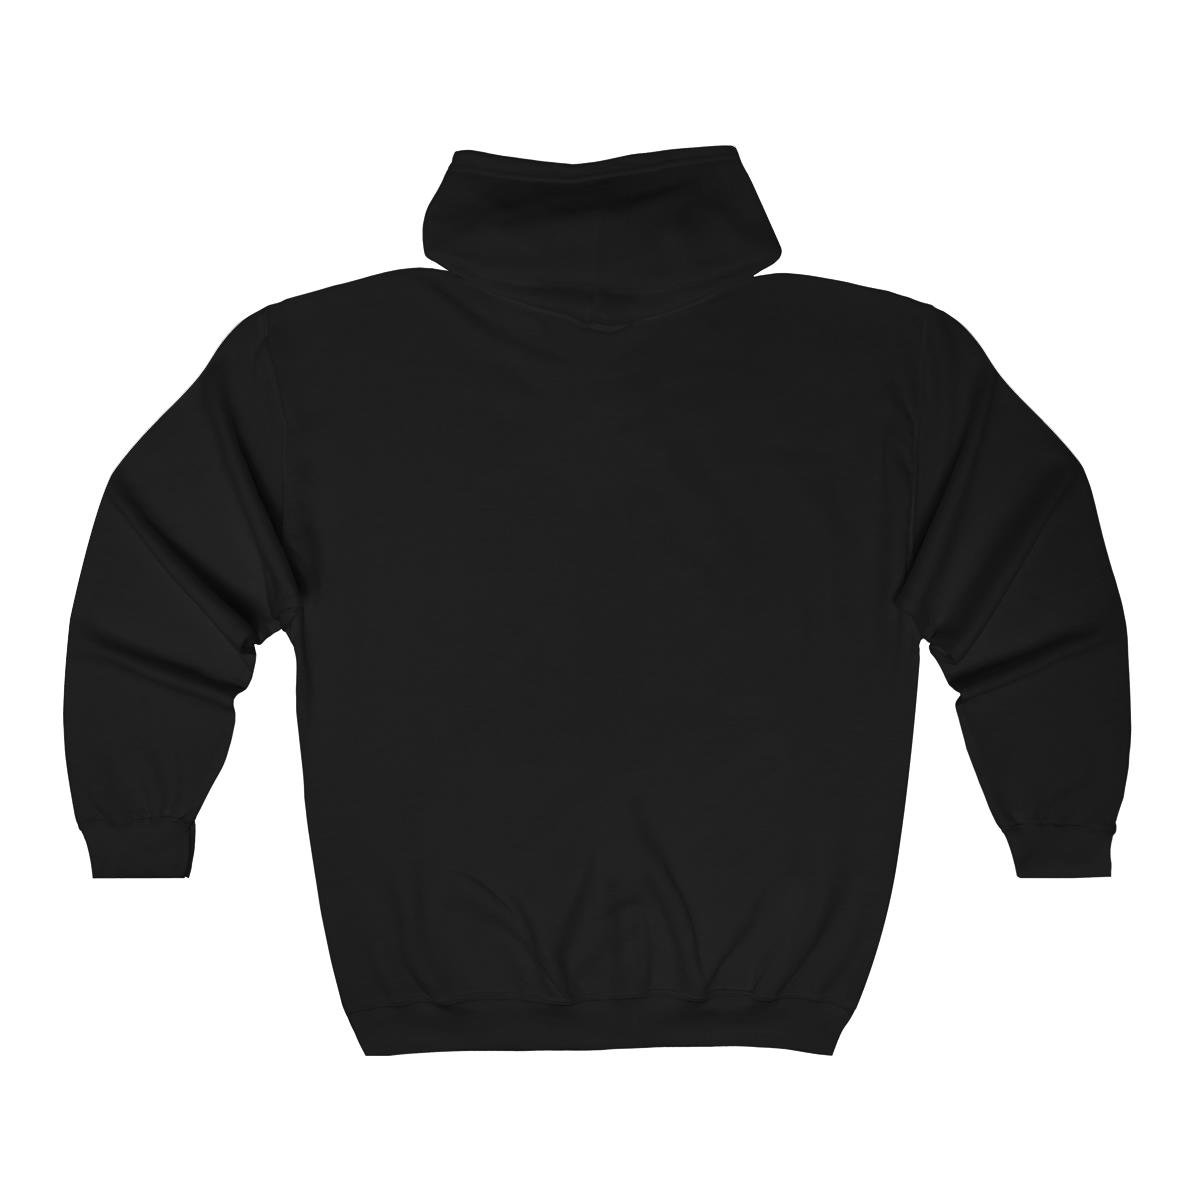 Daniel Amos BibleLand Full Zip Hooded Sweatshirt